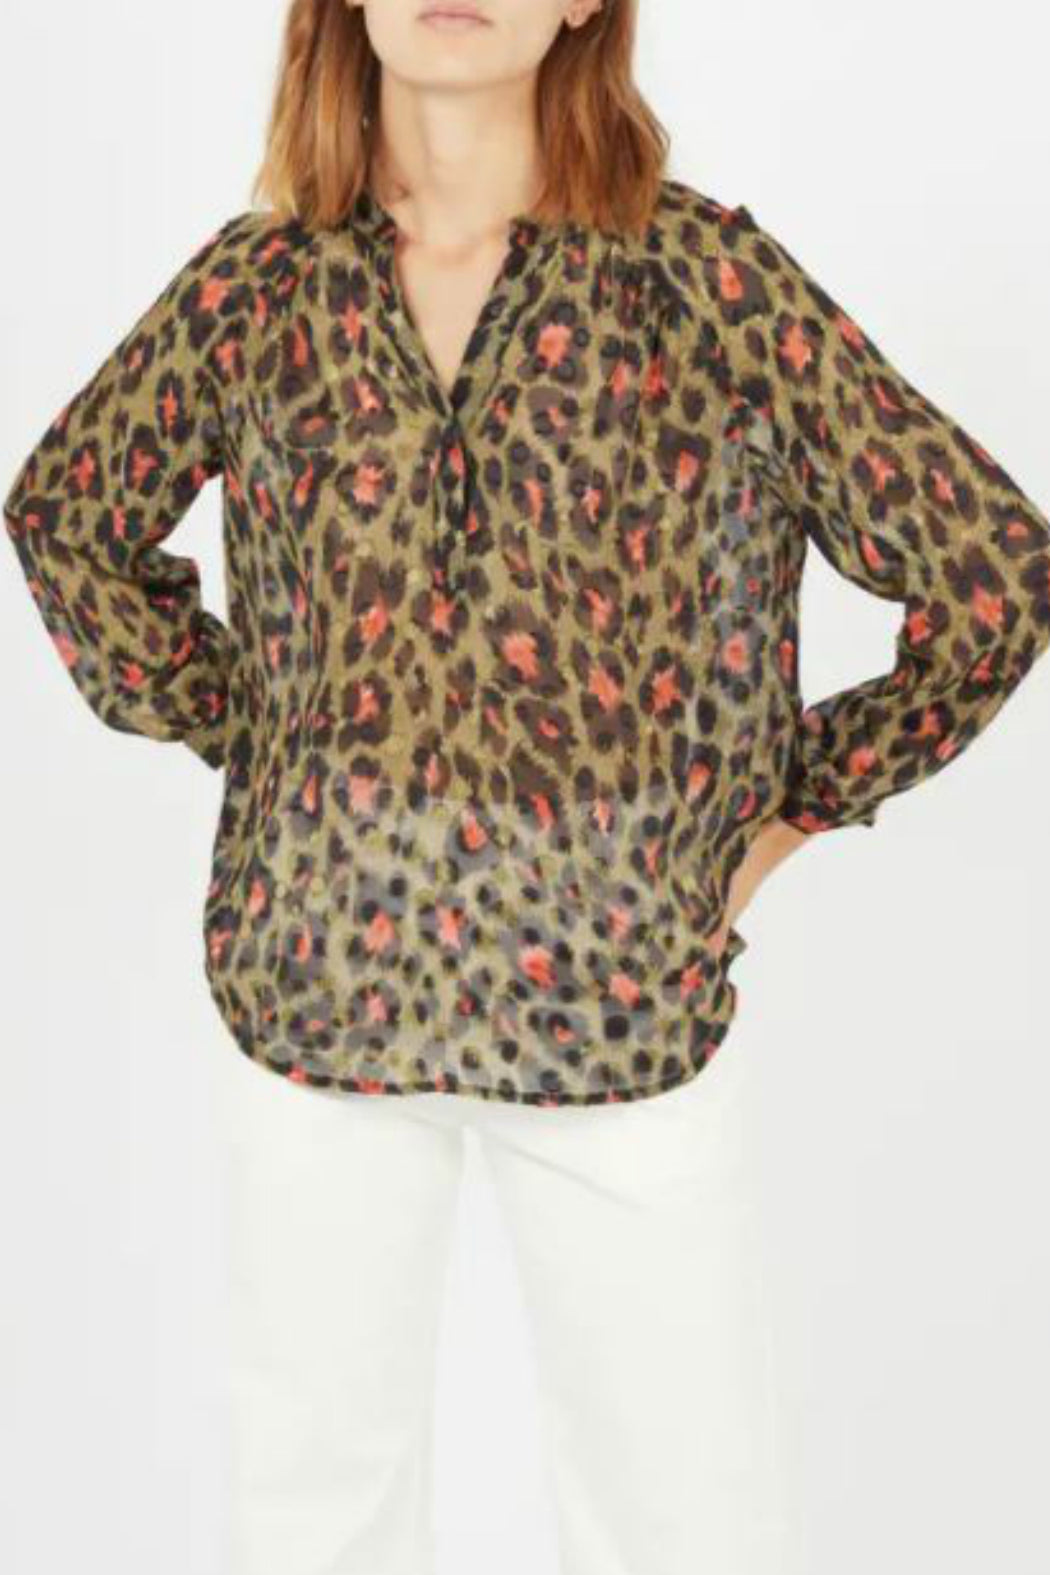 Sheer leopard print blouse